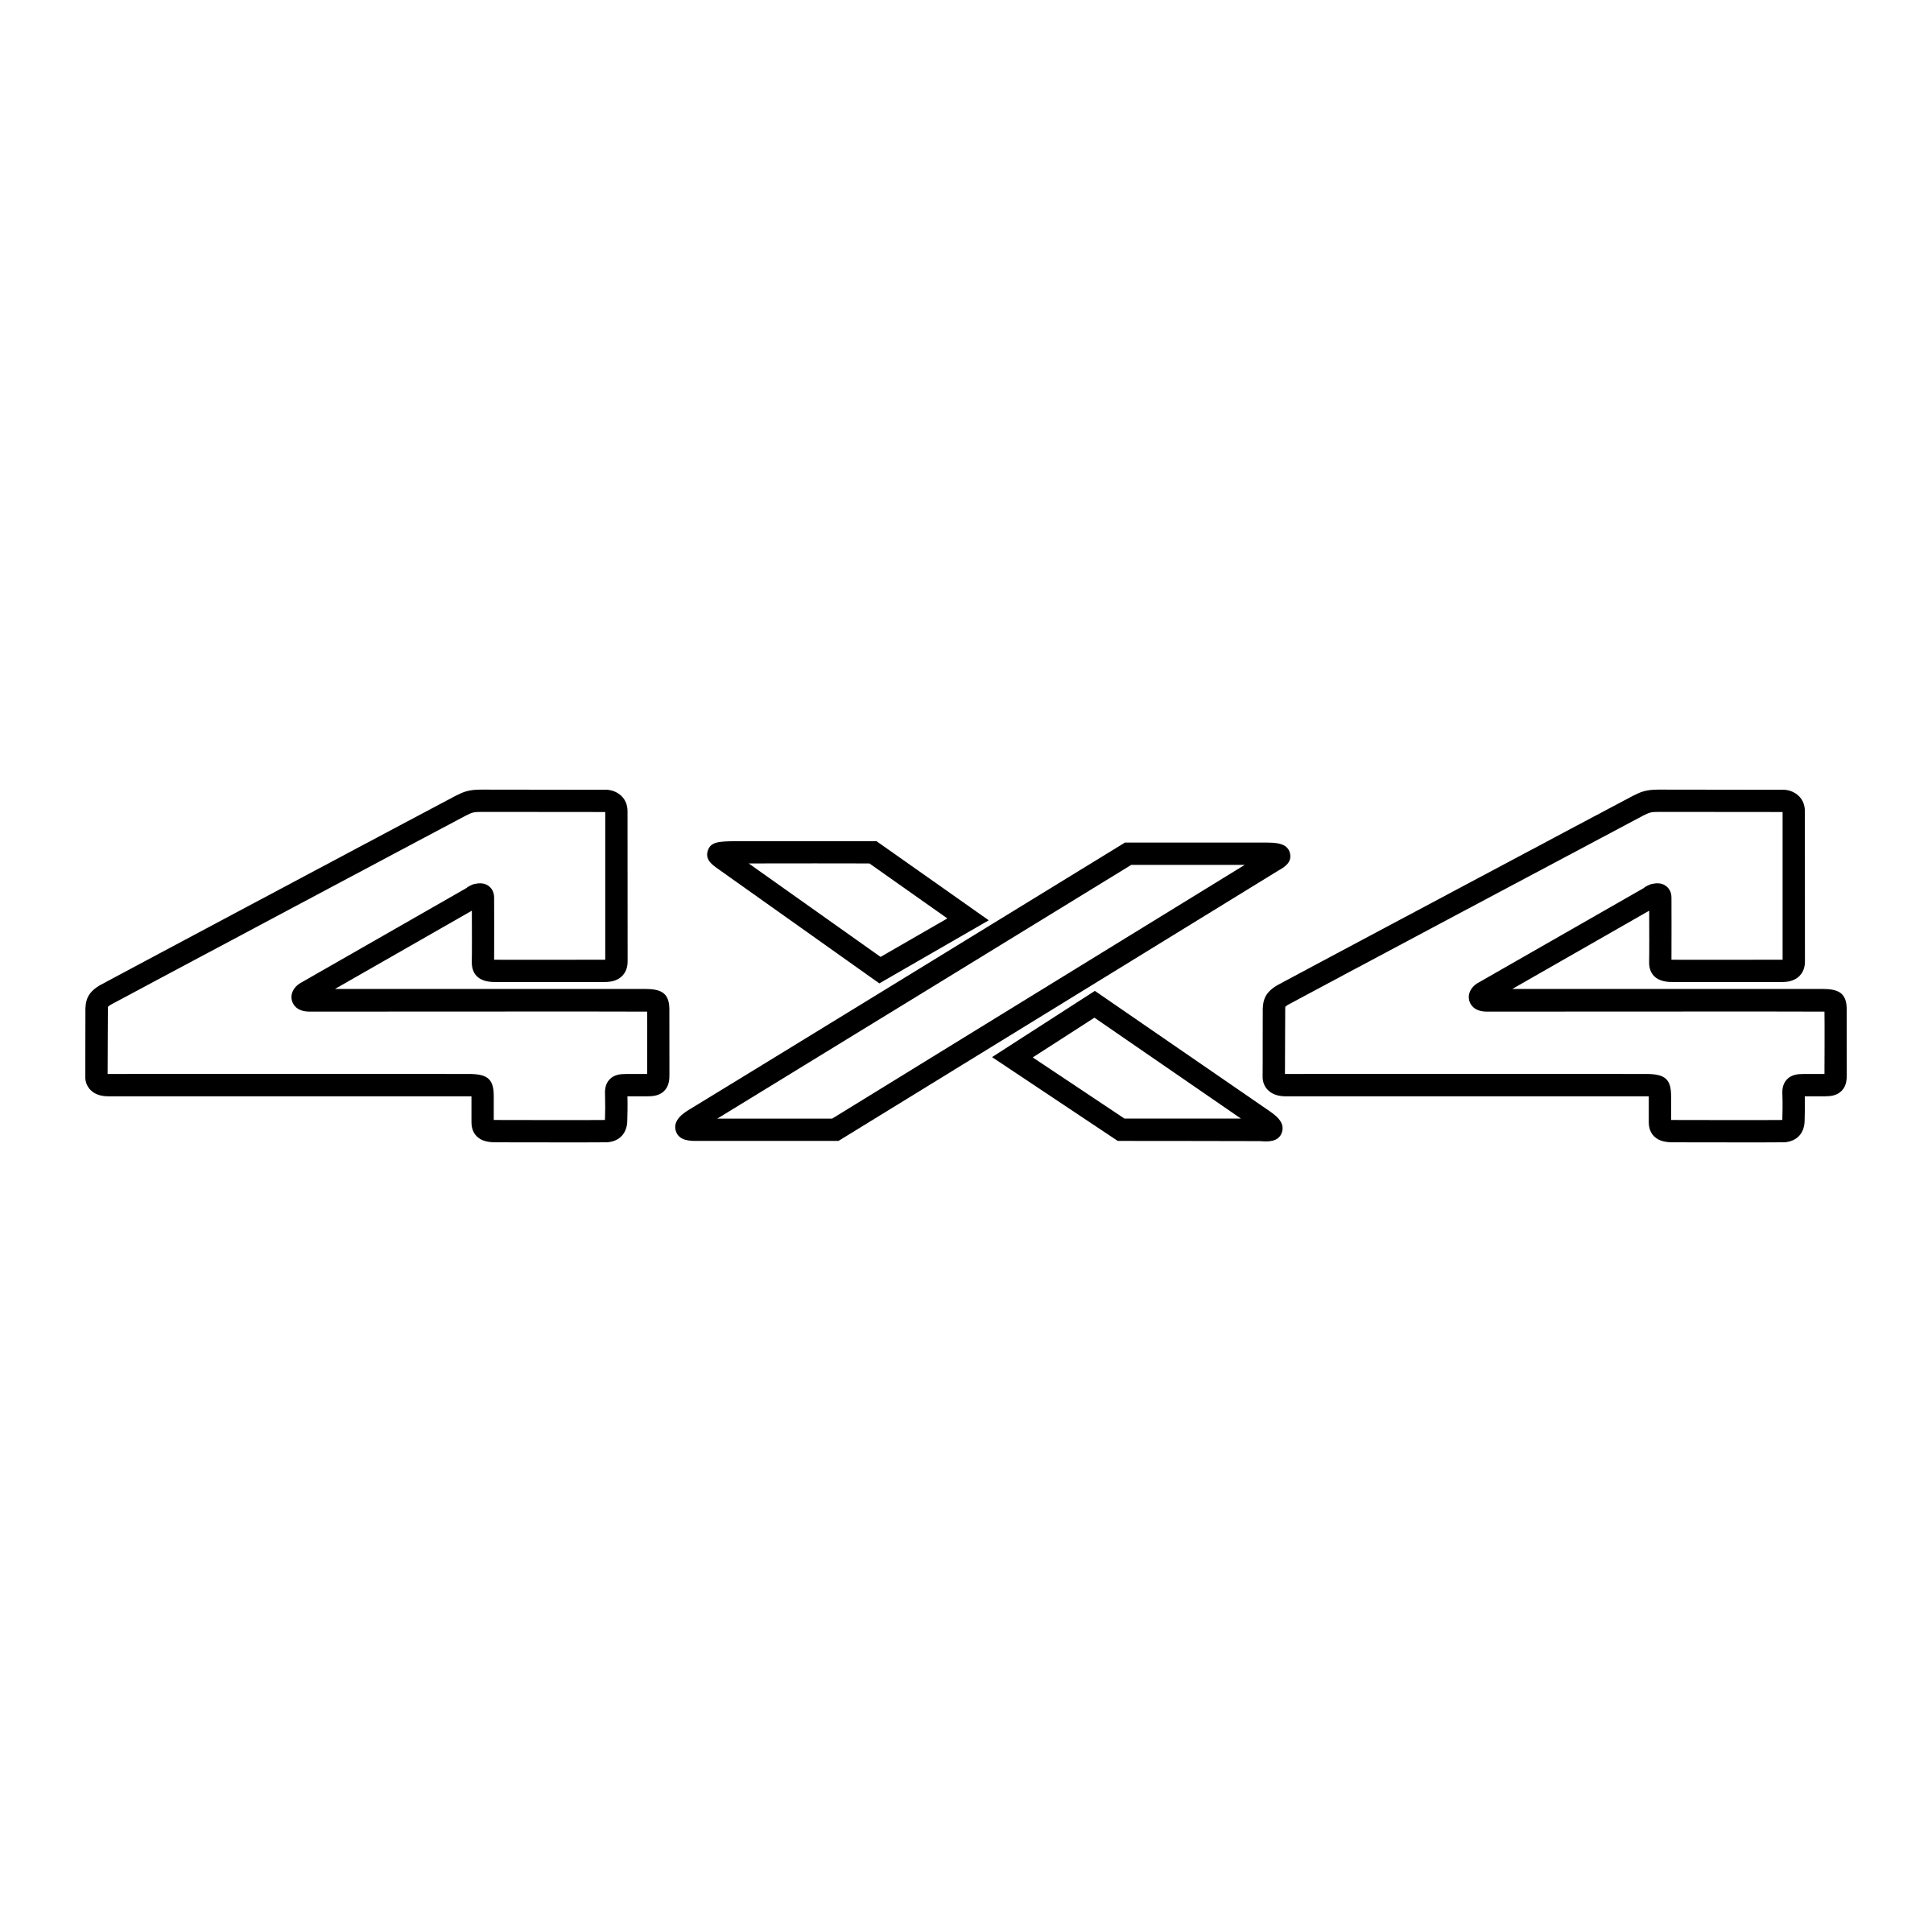 4x4 Logo - 4x4 Logo PNG Transparent & SVG Vector - Freebie Supply